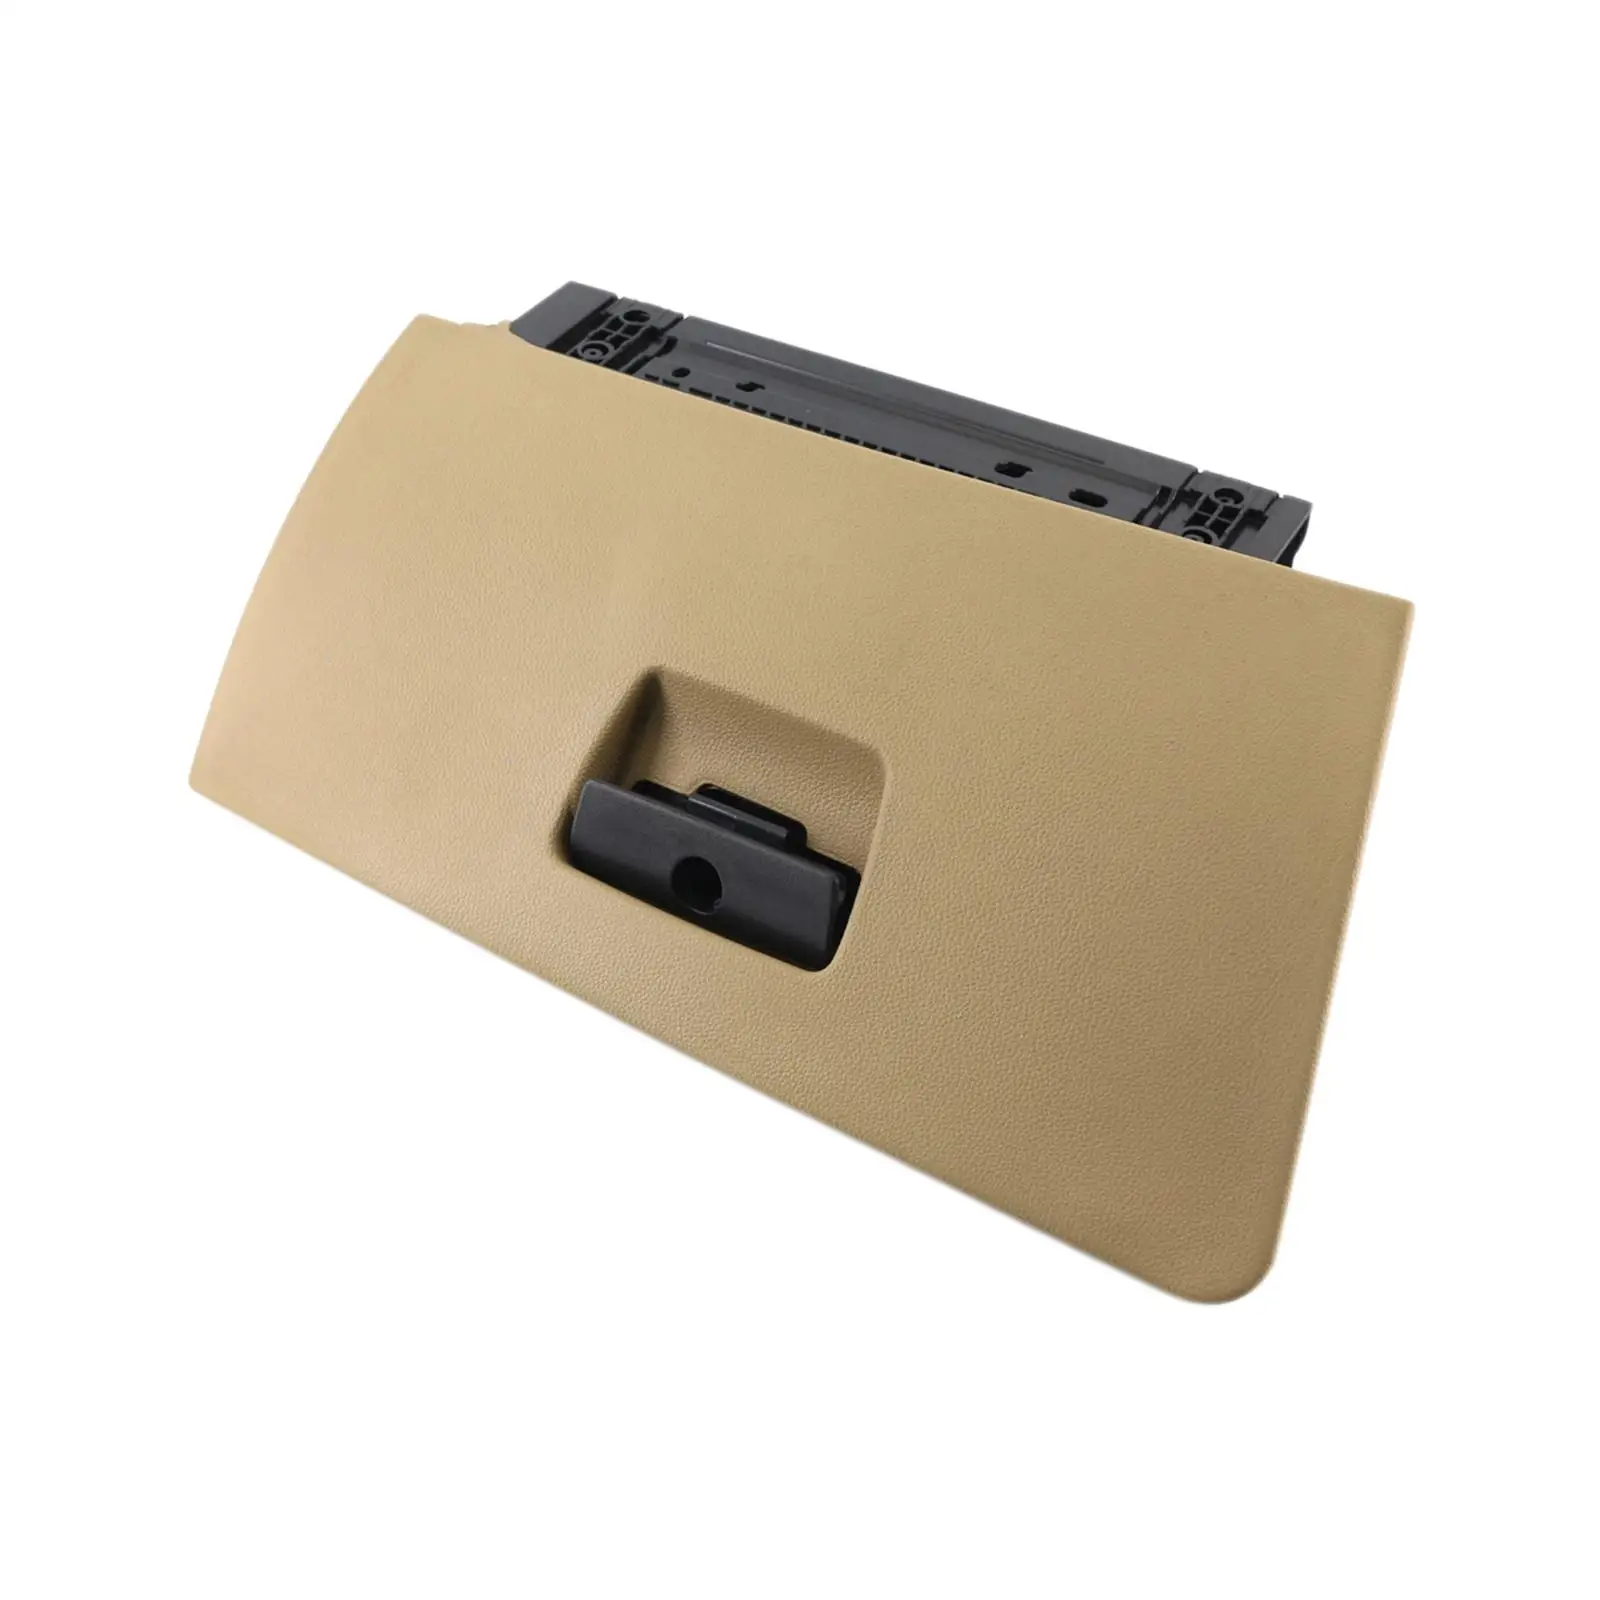 Glovebox Replaces Premium Professional Spare Parts Durable Portable Glove Box Storage Compartment for BMW E90 D91 E92 06-13